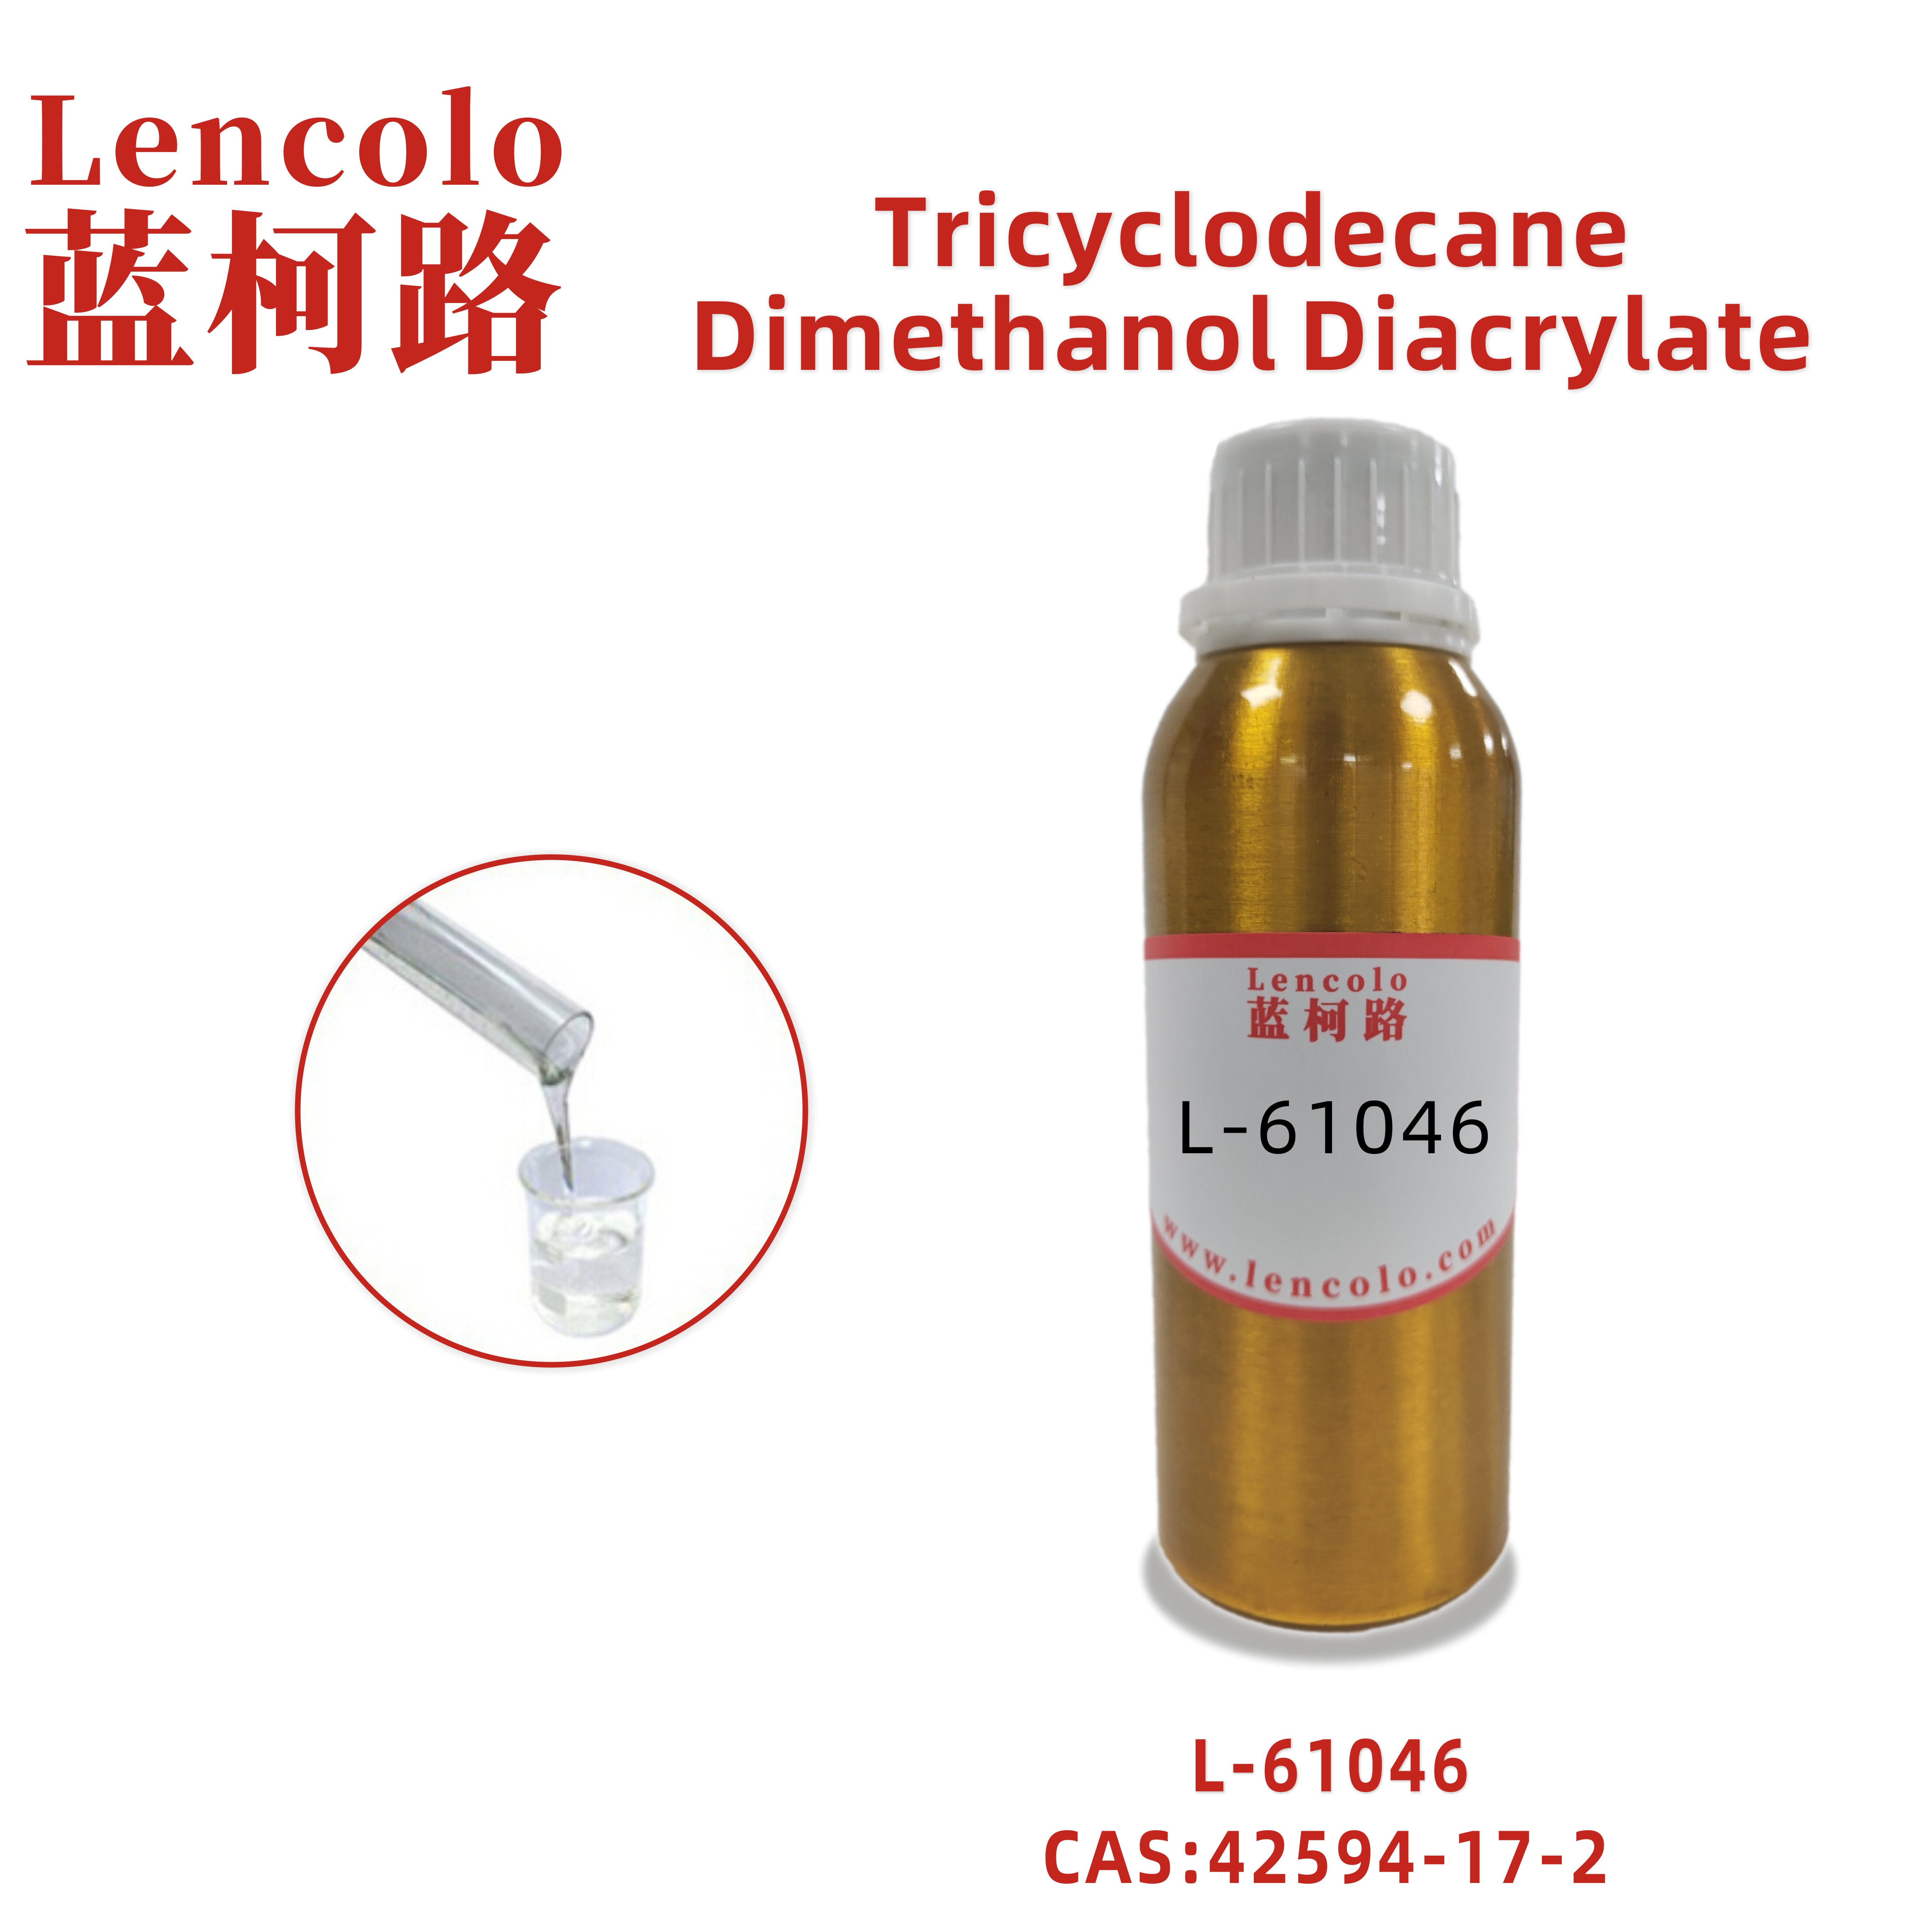 L-61046 (DCPDA) Tricyclodecane Dimethanol Diacrylate